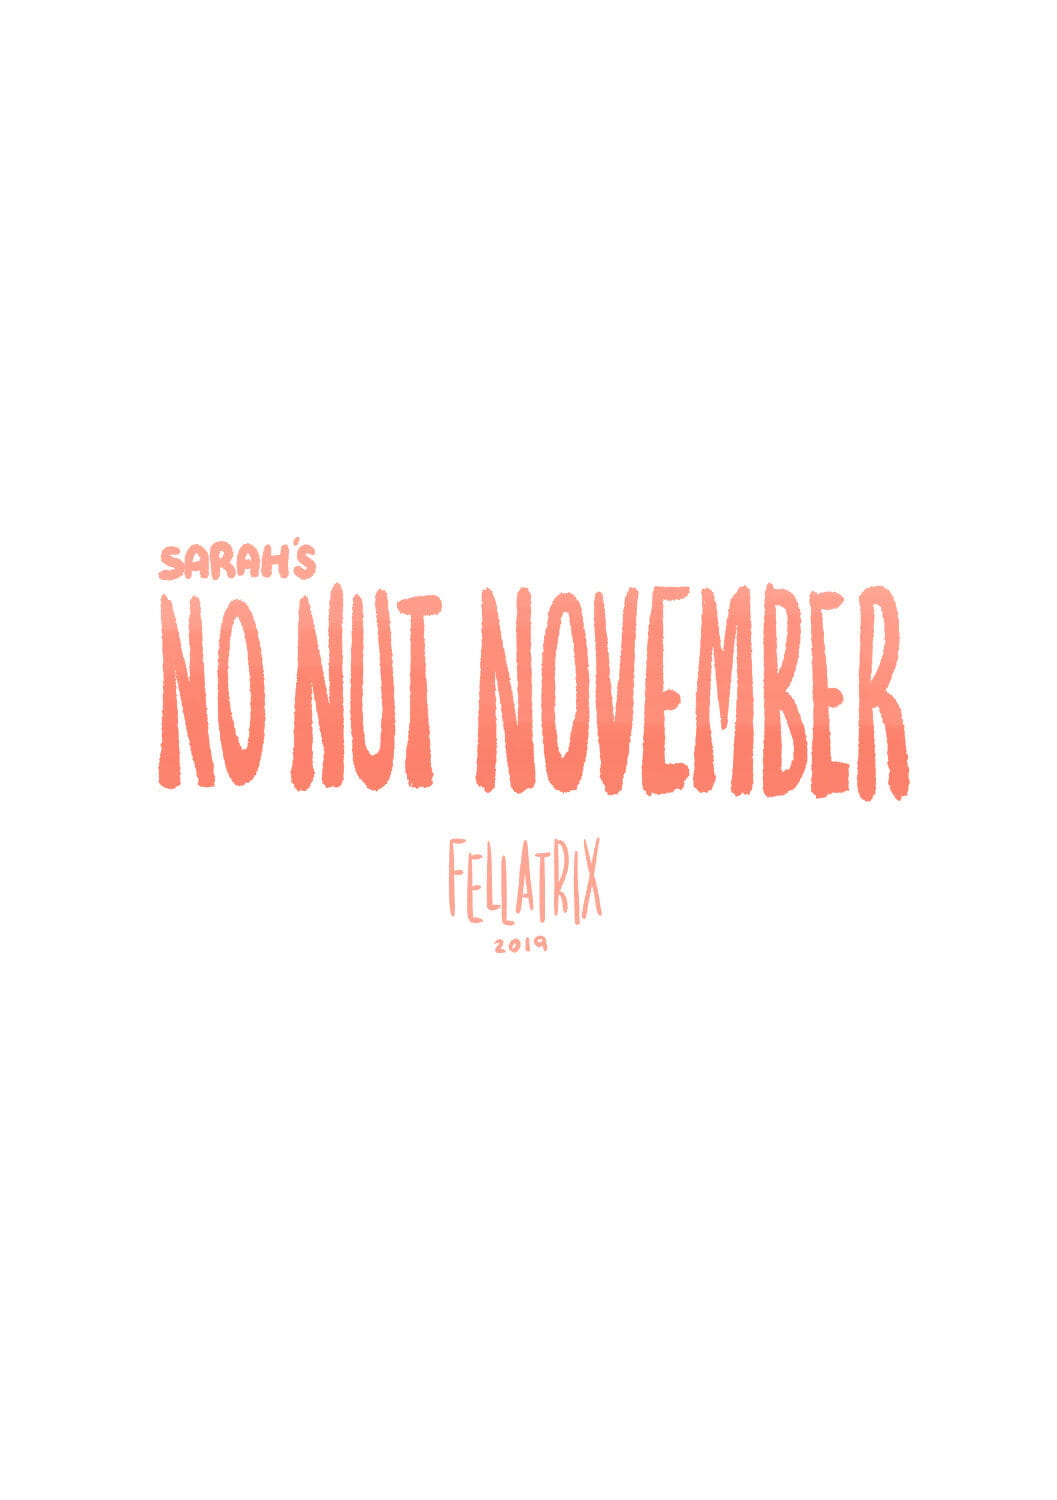 Sarahs No Nut November